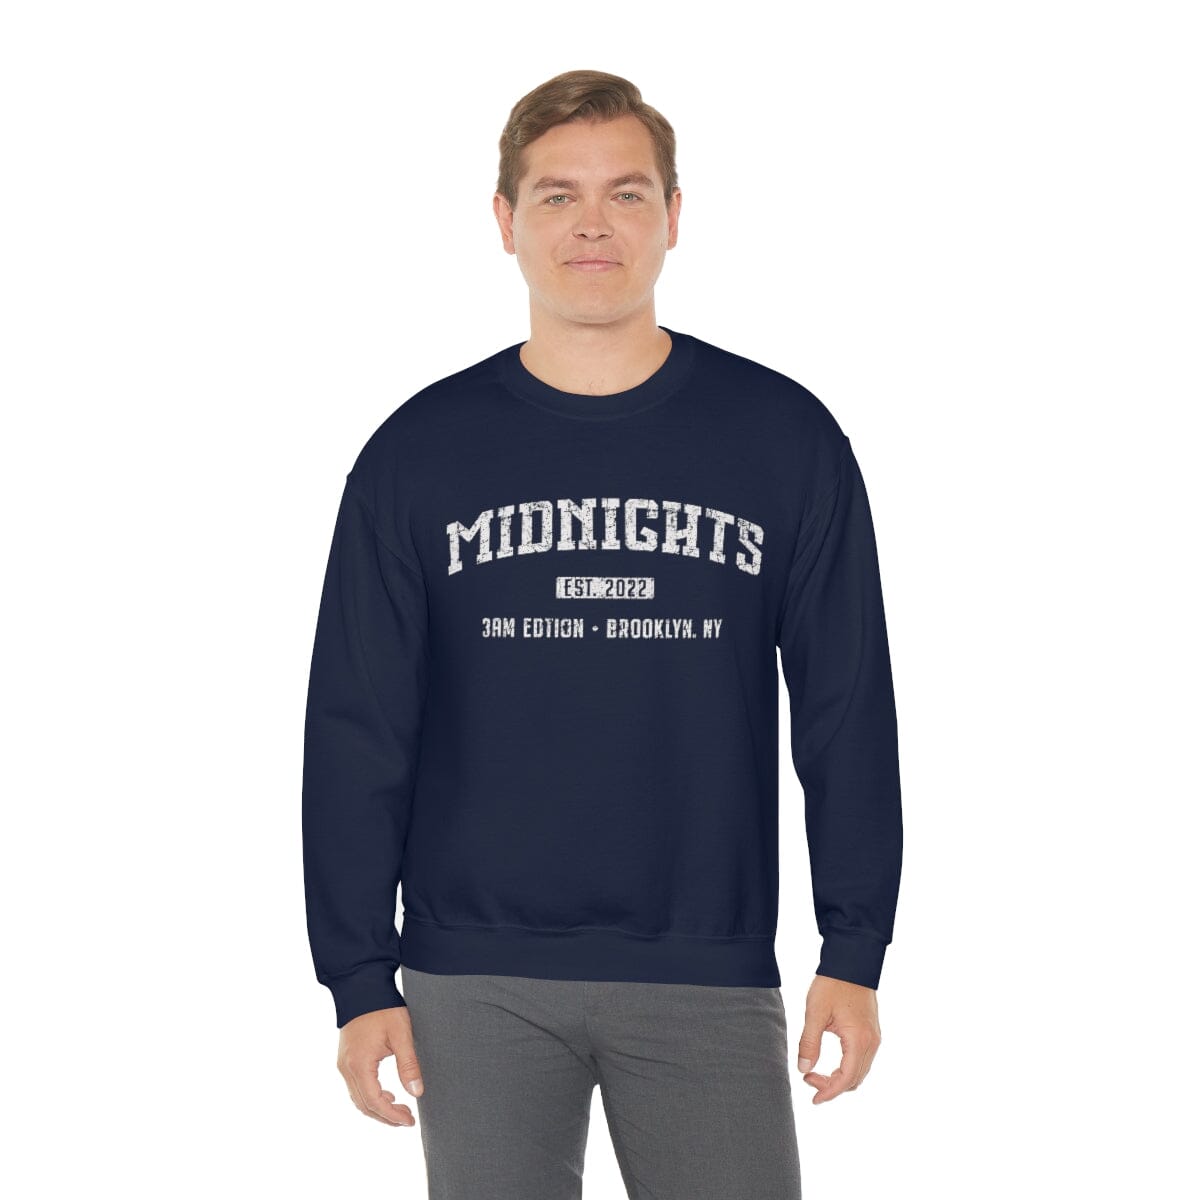 Midnights • Greens & Blues Sweatshirt Printify 